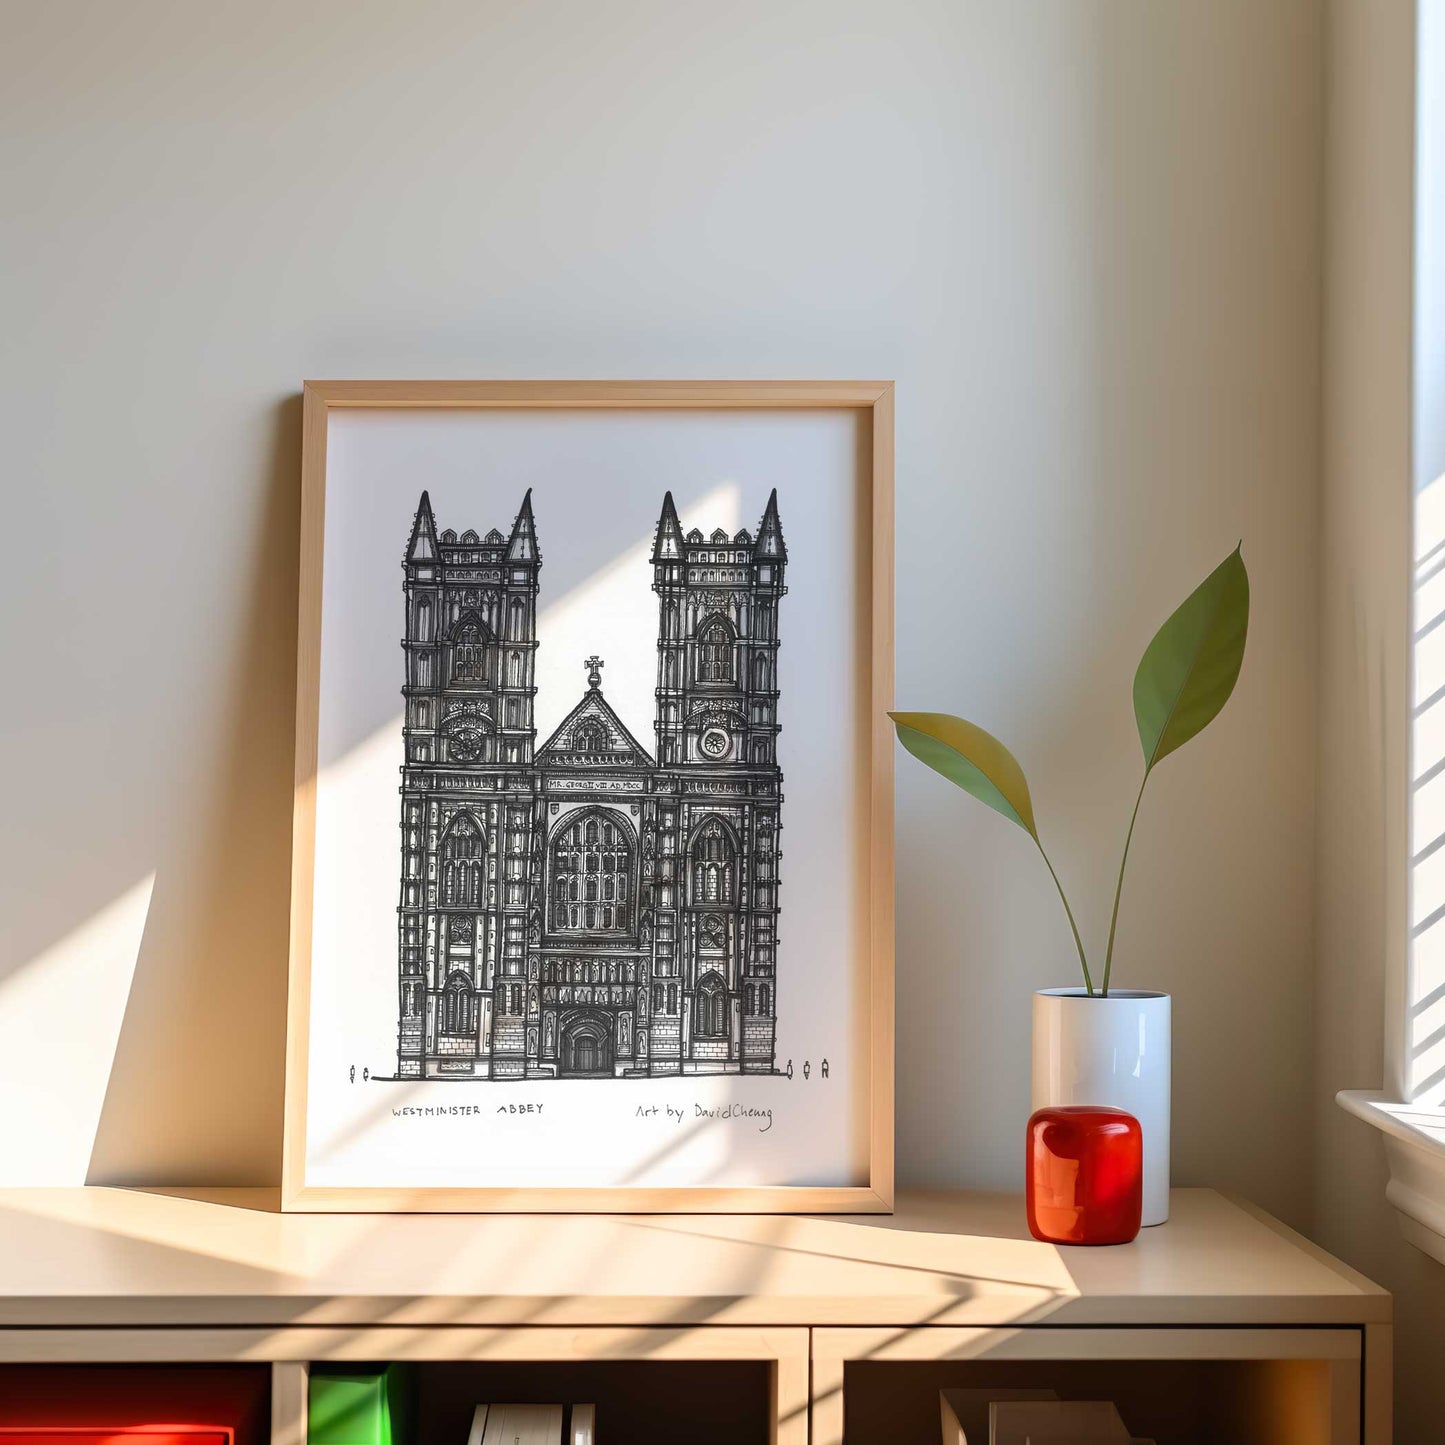 Art print "London Westminster Abbey"